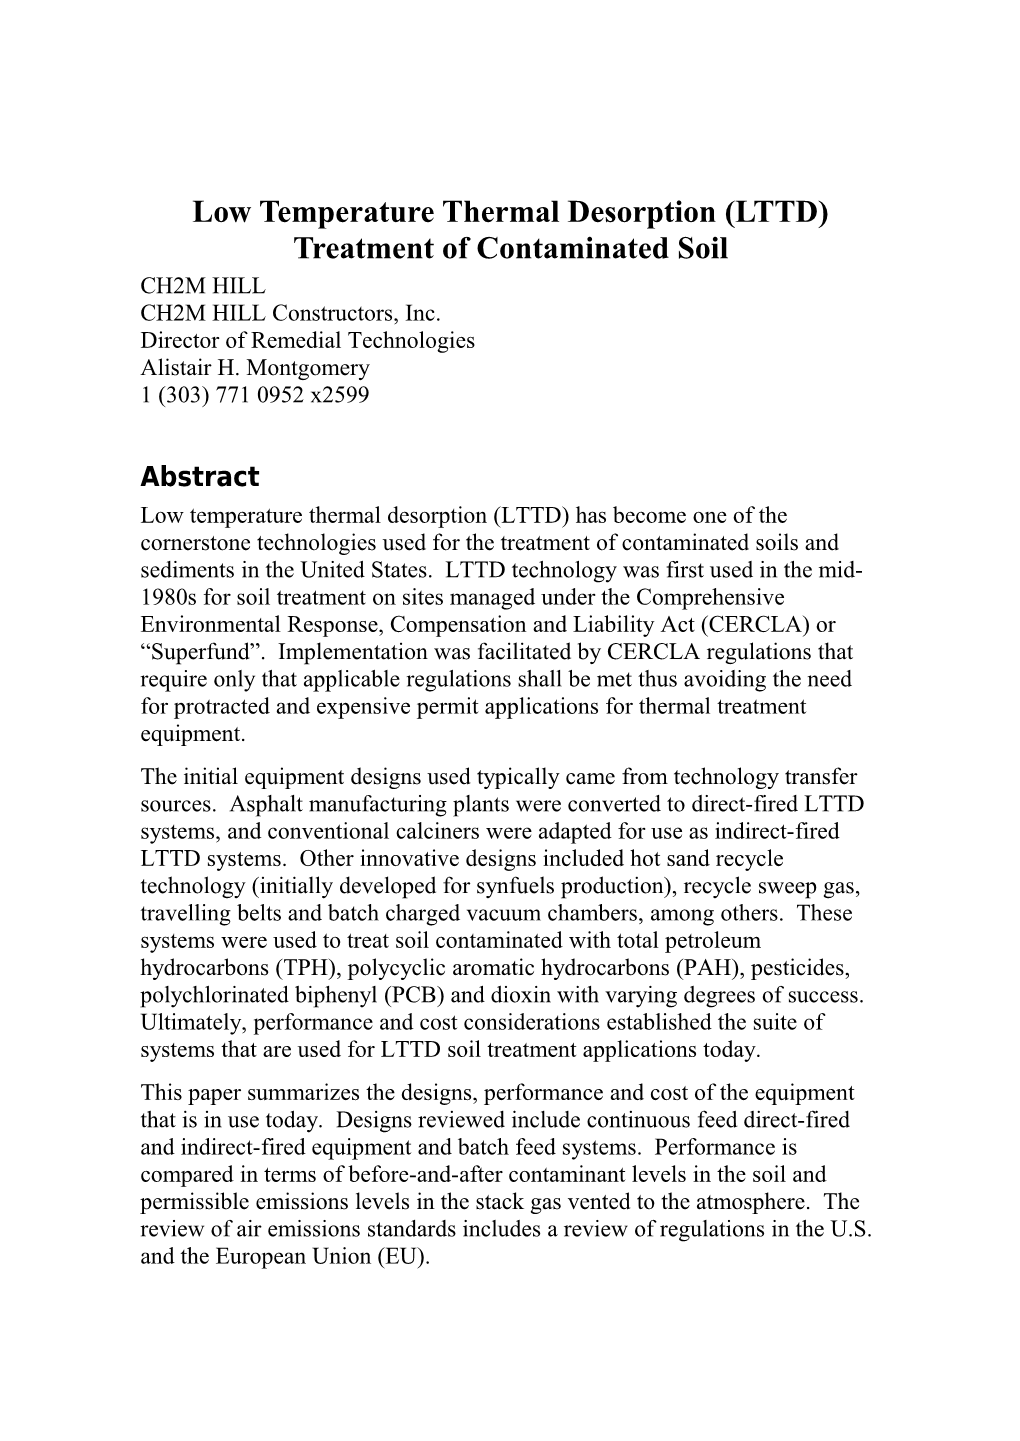 Low Temperature Thermal Desorption (LTTD) Treatment of Contaminated Soil